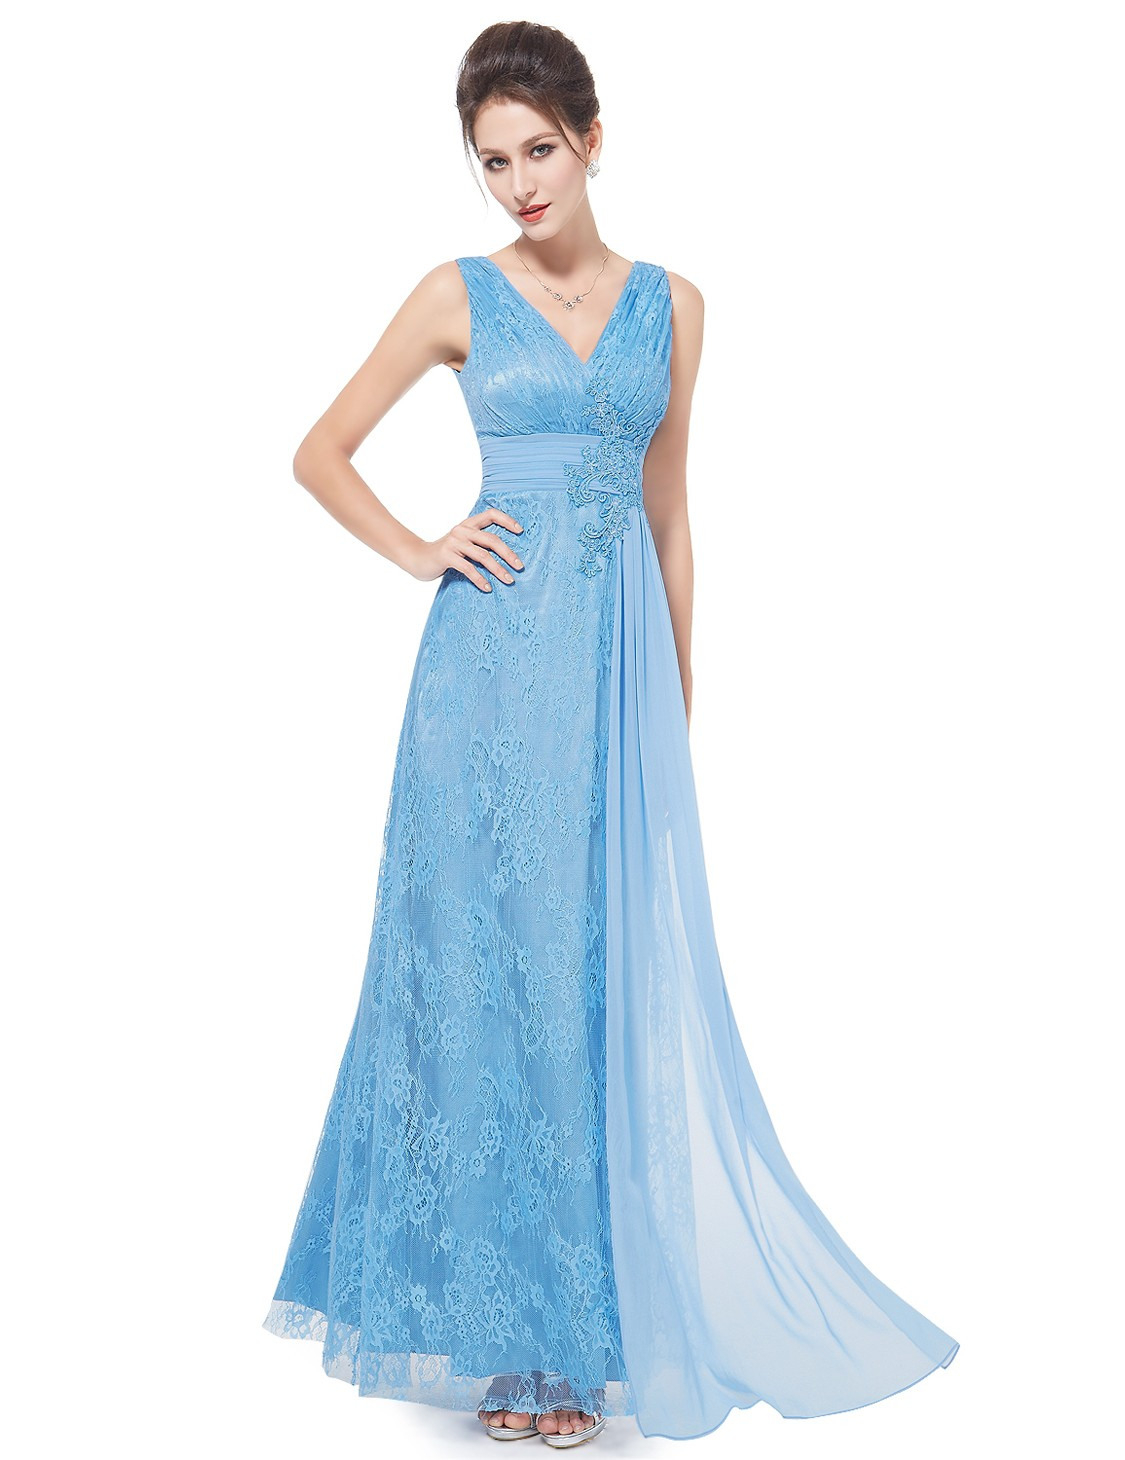 10 Luxurius Royalblaues Abendkleid BoutiqueDesigner Genial Royalblaues Abendkleid Vertrieb